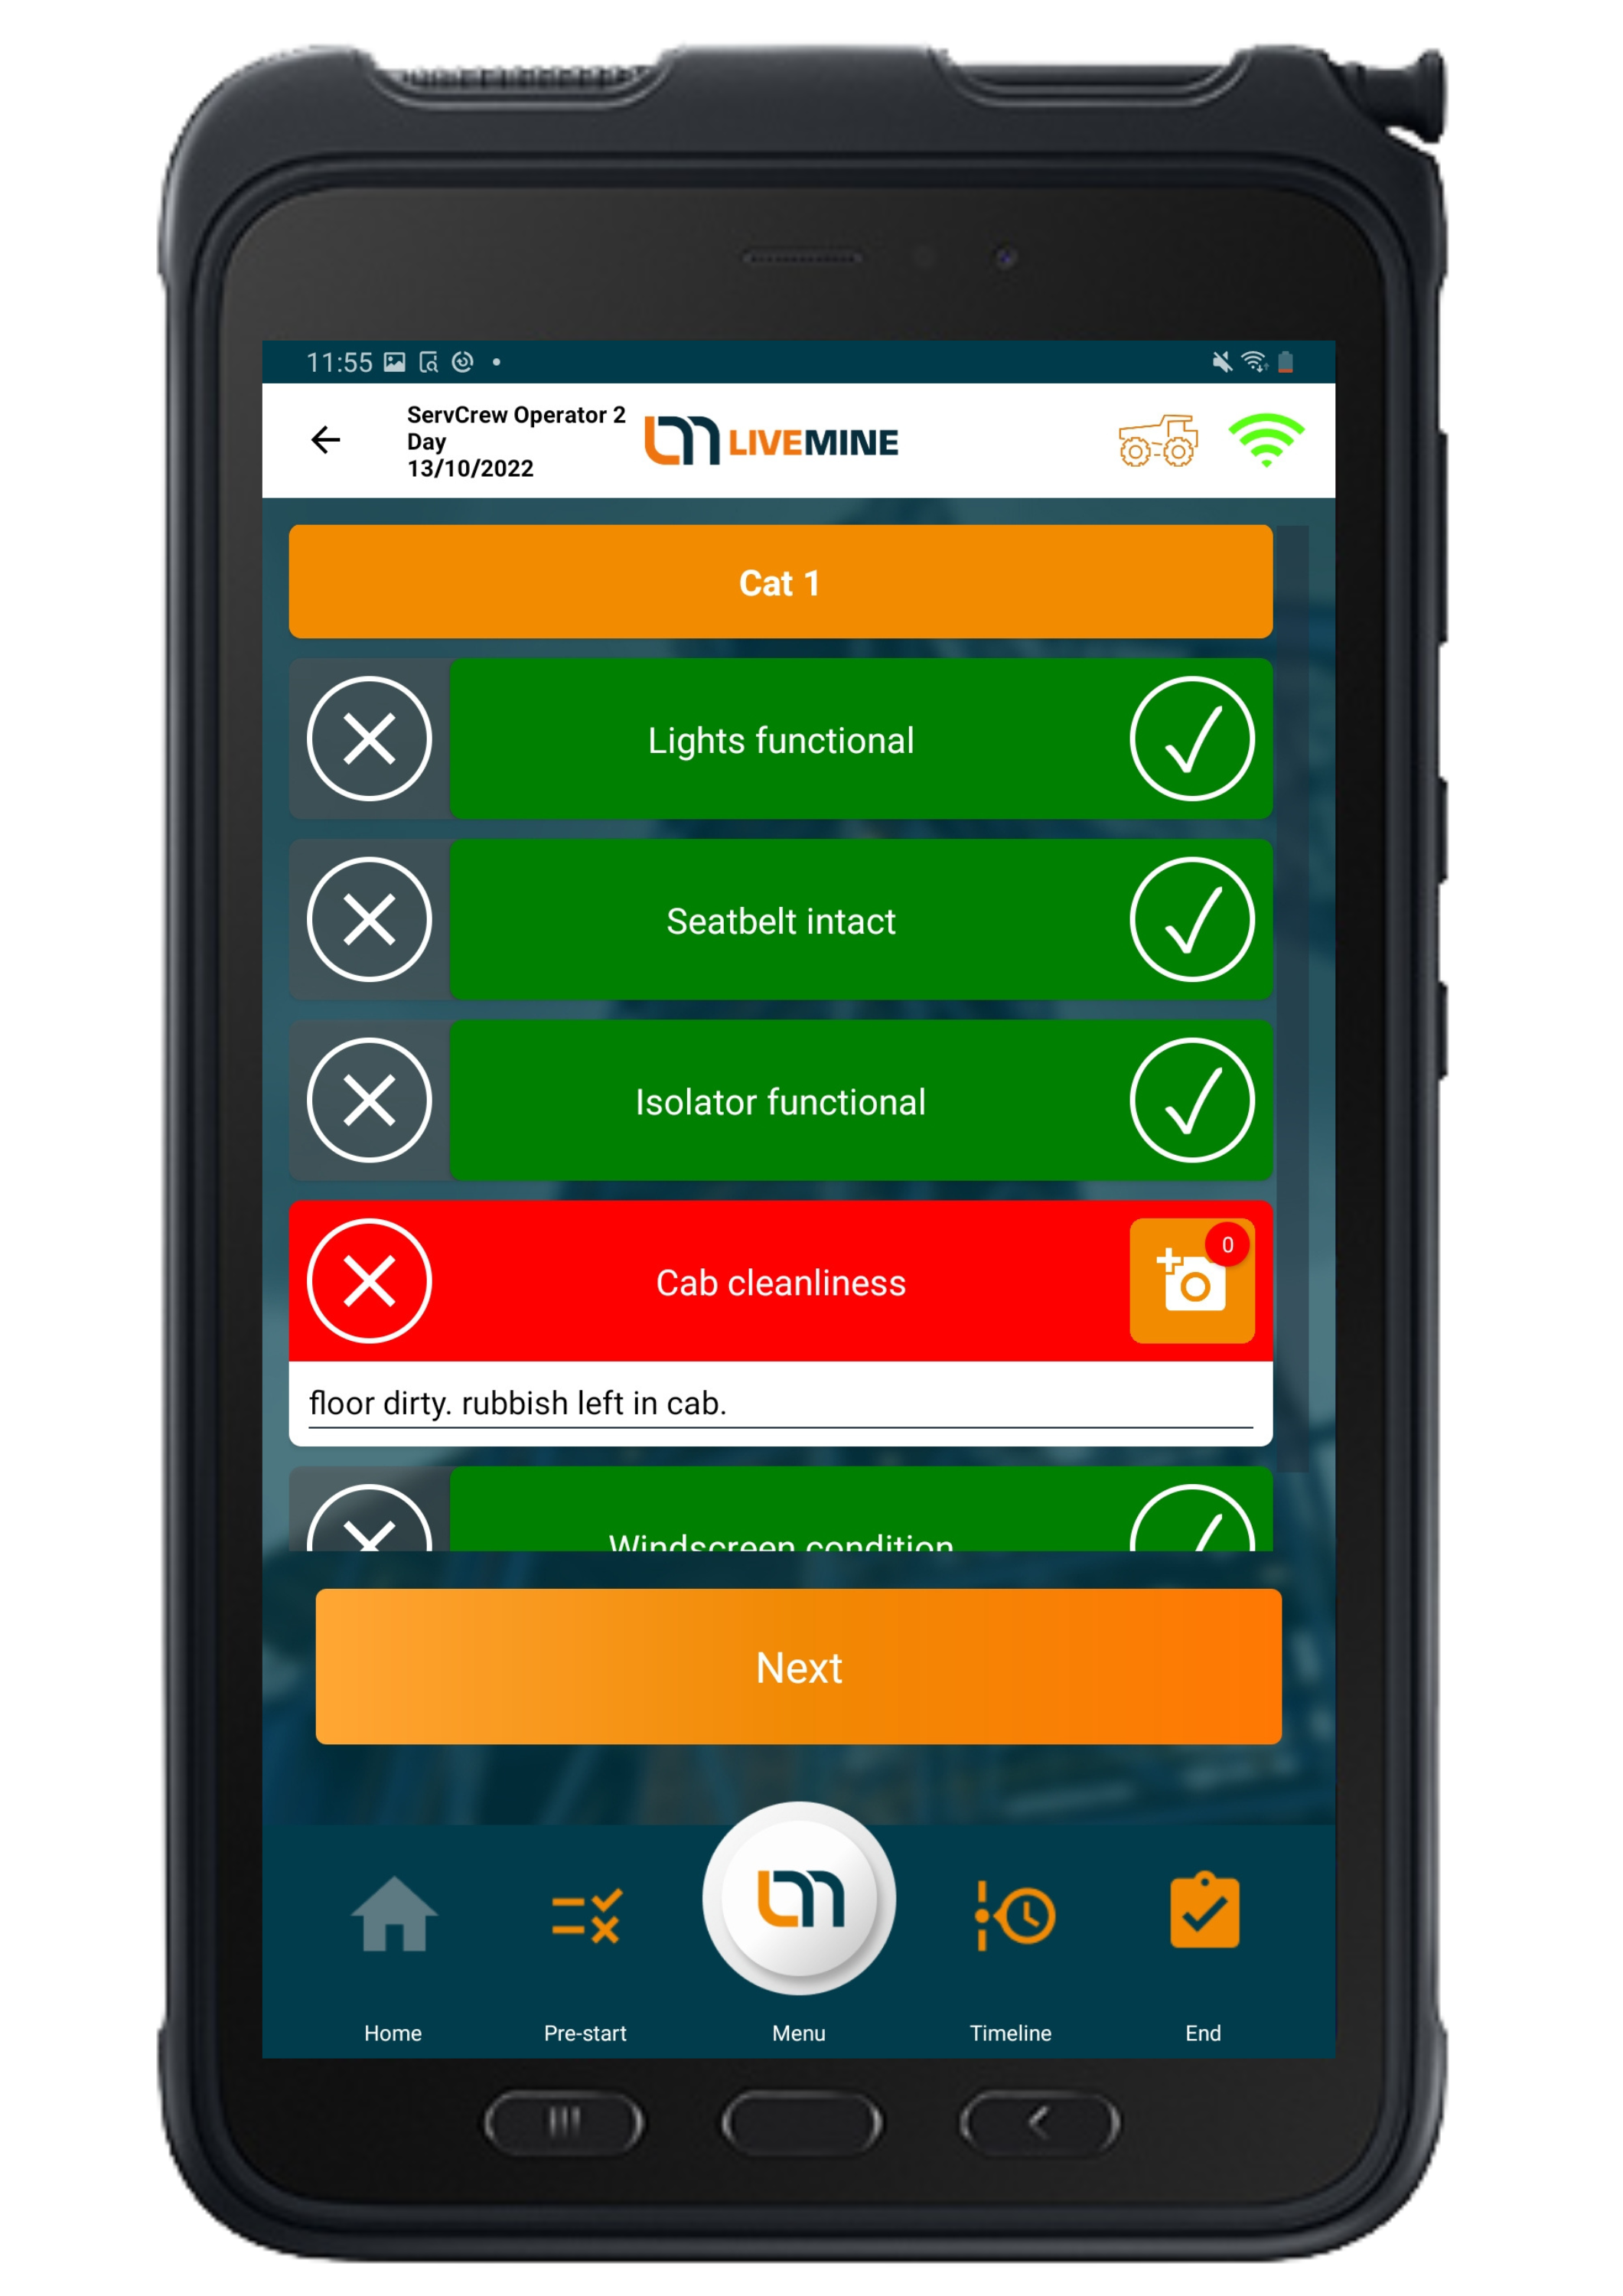 Live A&E and MIU Waiting Time Mobile App - Download Zeeto for A&E/MIU live  waiting time   #Emergency #LiveWaitingTime